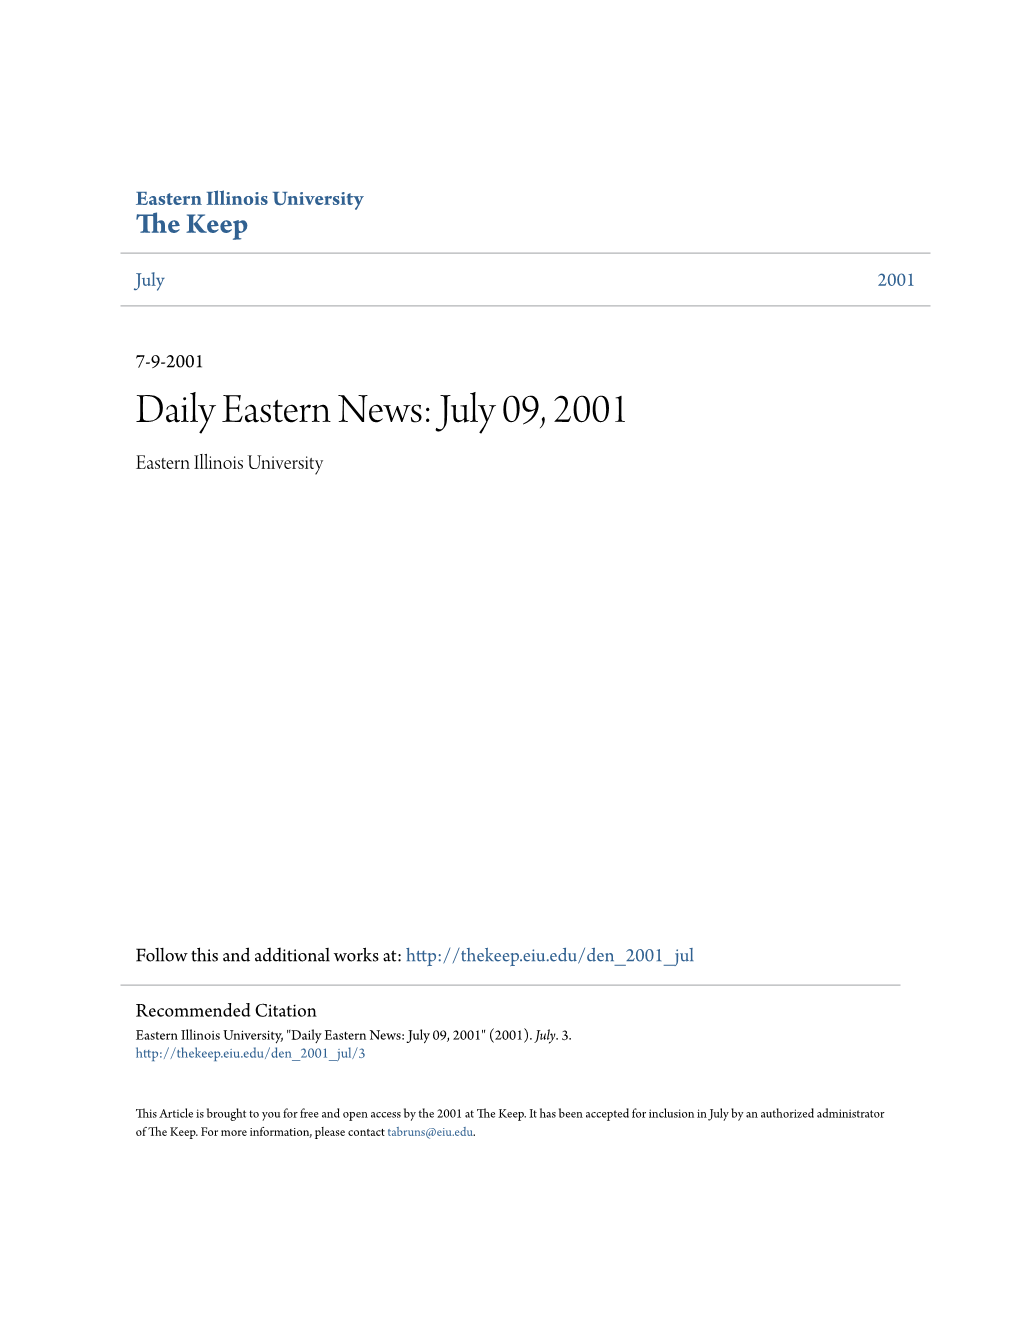 Daily Eastern News: July 09, 2001 Eastern Illinois University